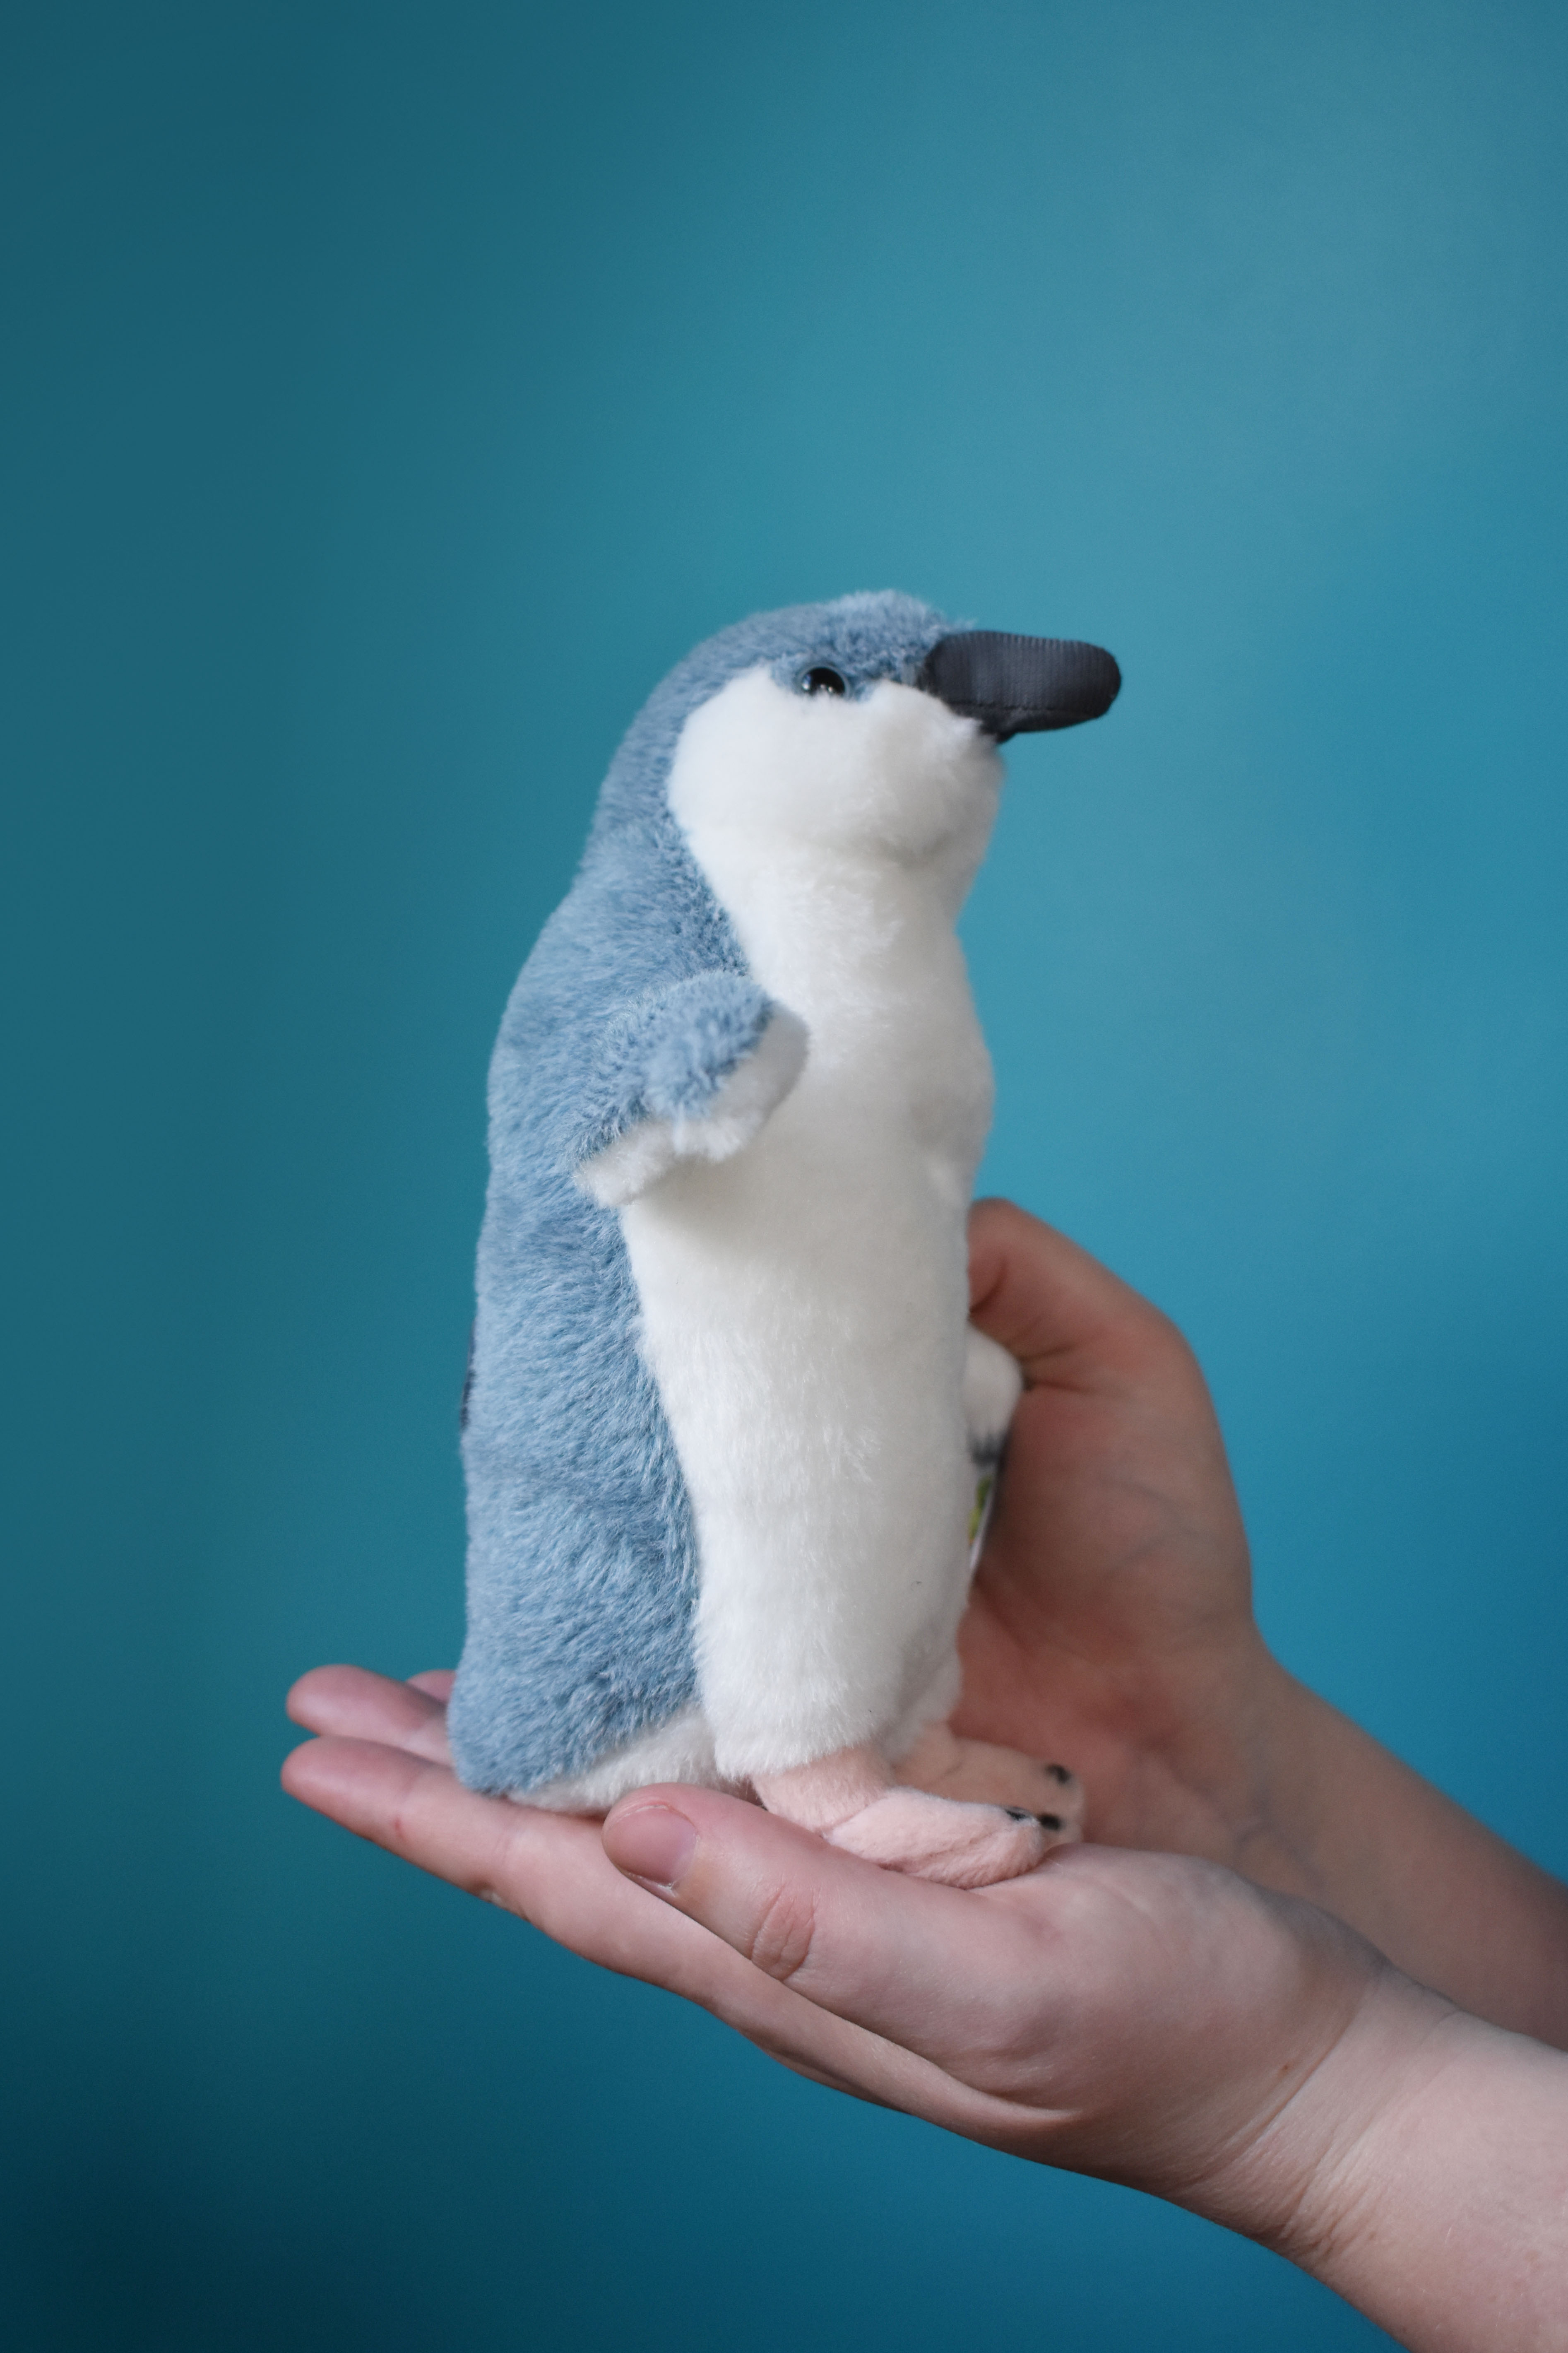 blue penguin soft toy